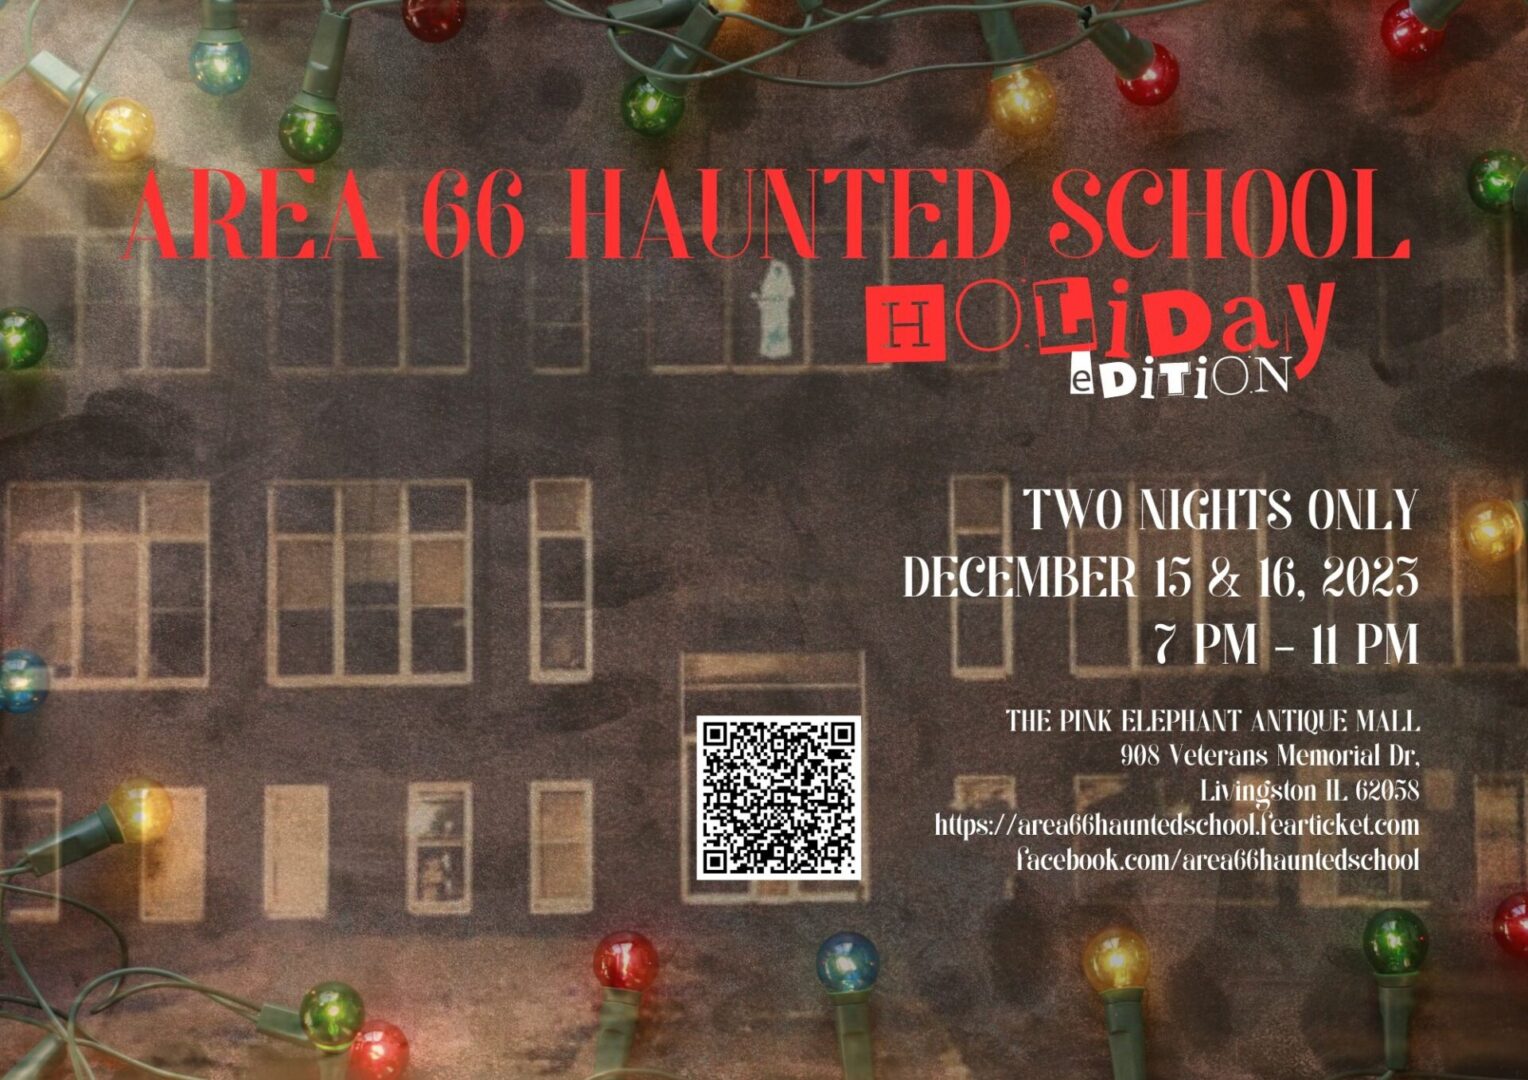 Area 66 Haunted School: Holiday Edition